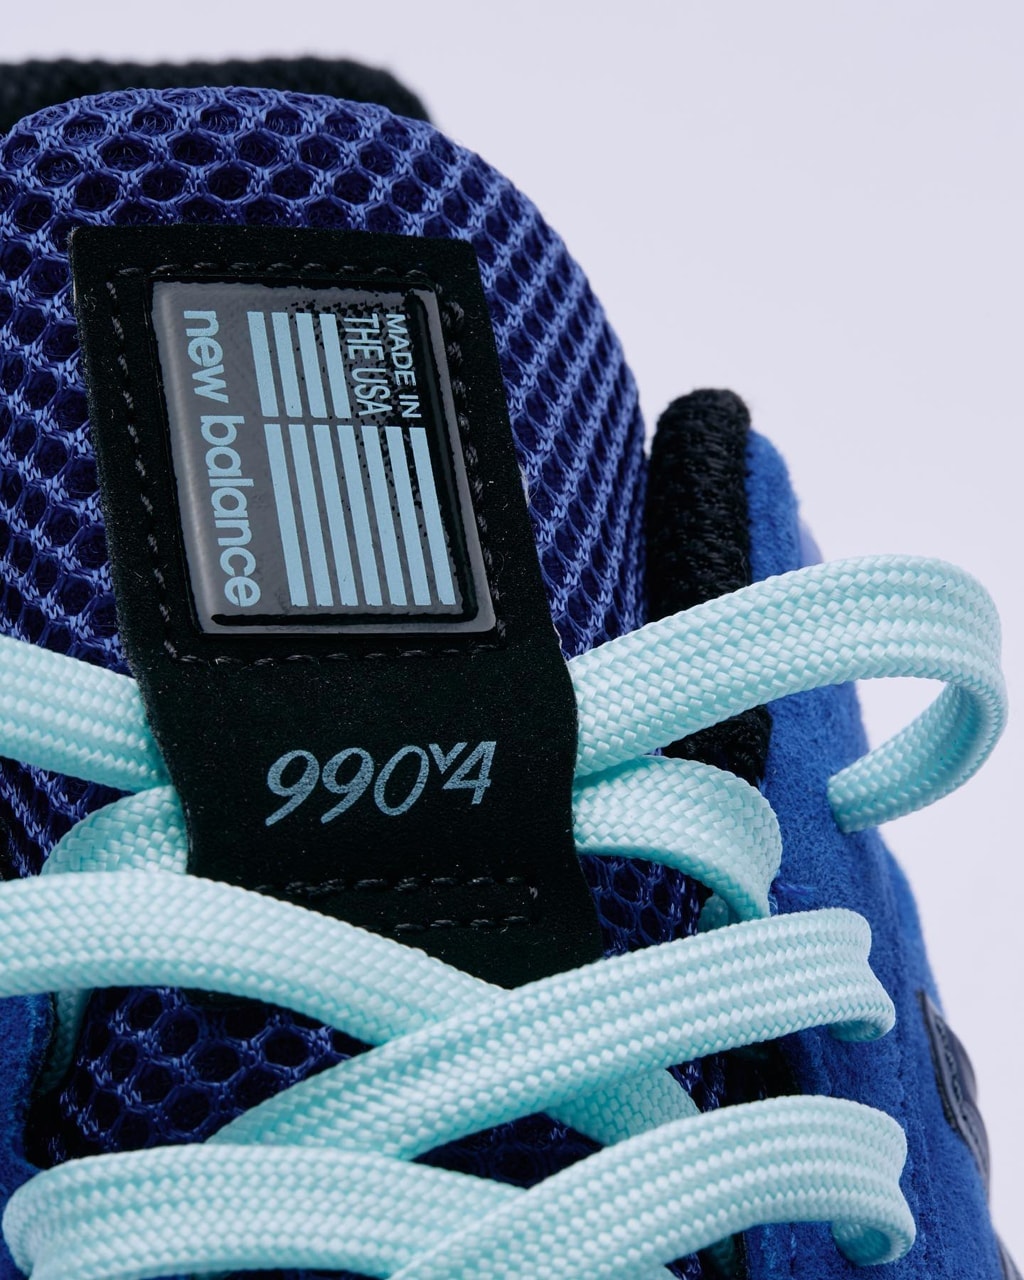 Joe Freshgoods x New Balance 990v4 最新聯名鞋款正式發佈